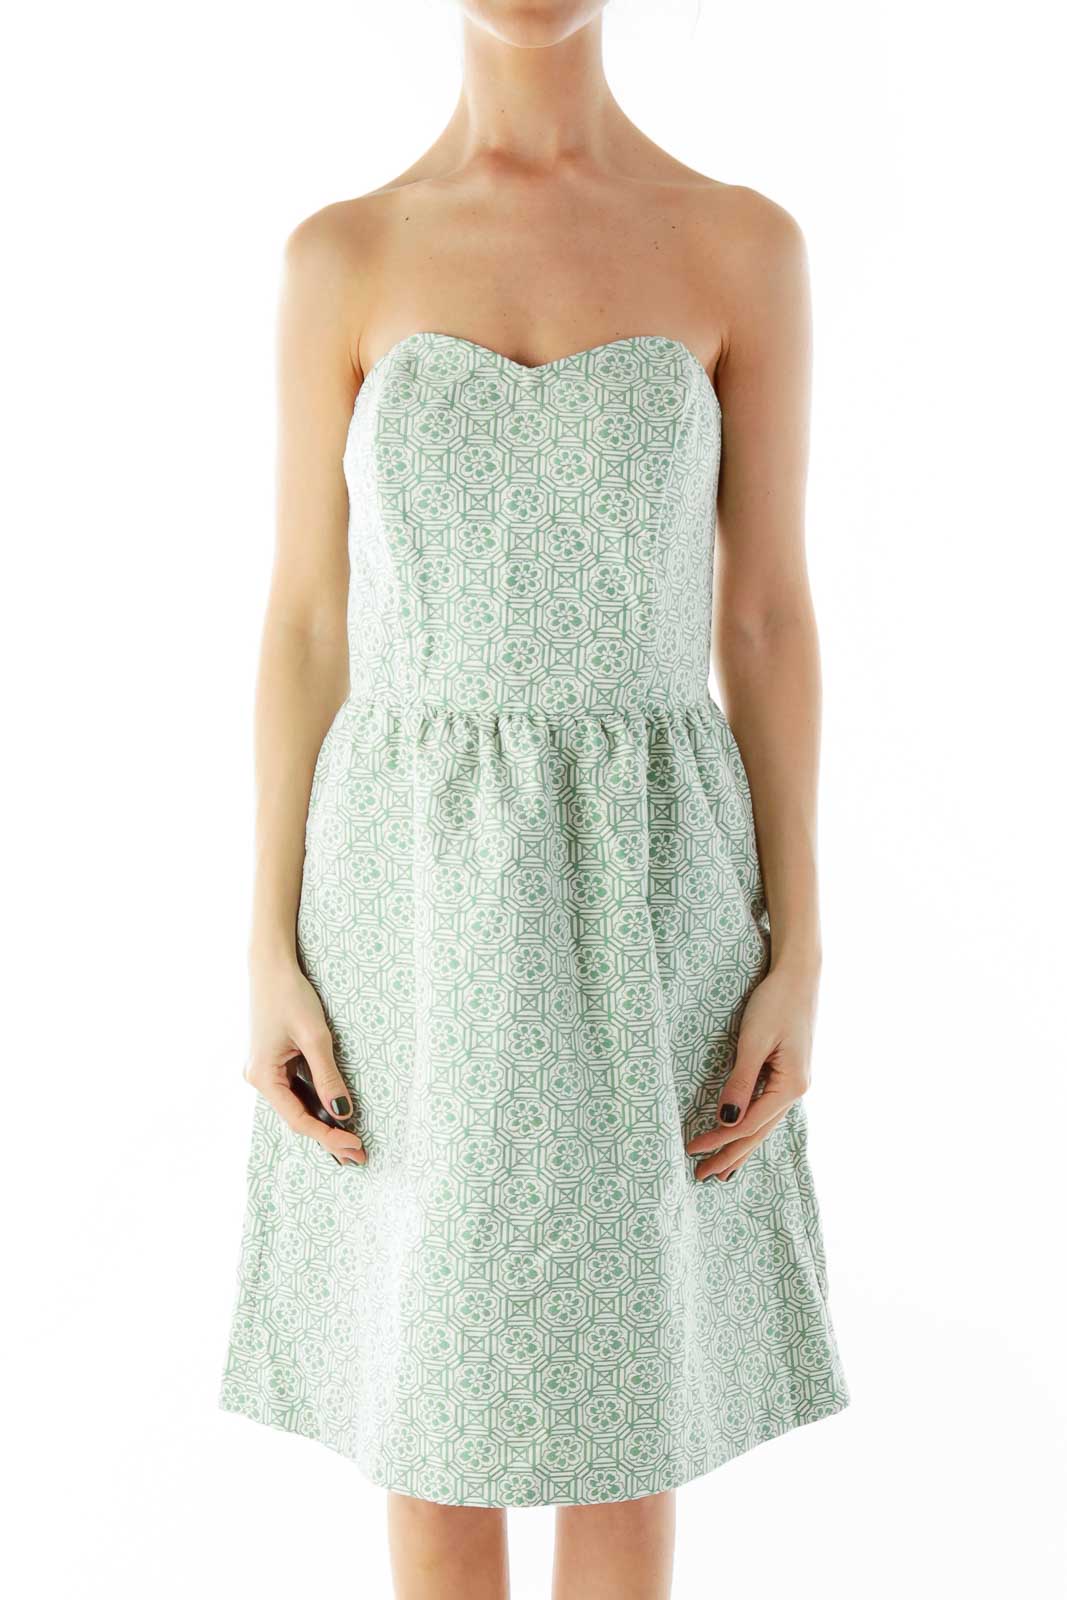 Green White Geometric Flower Print Strapless Dress Front